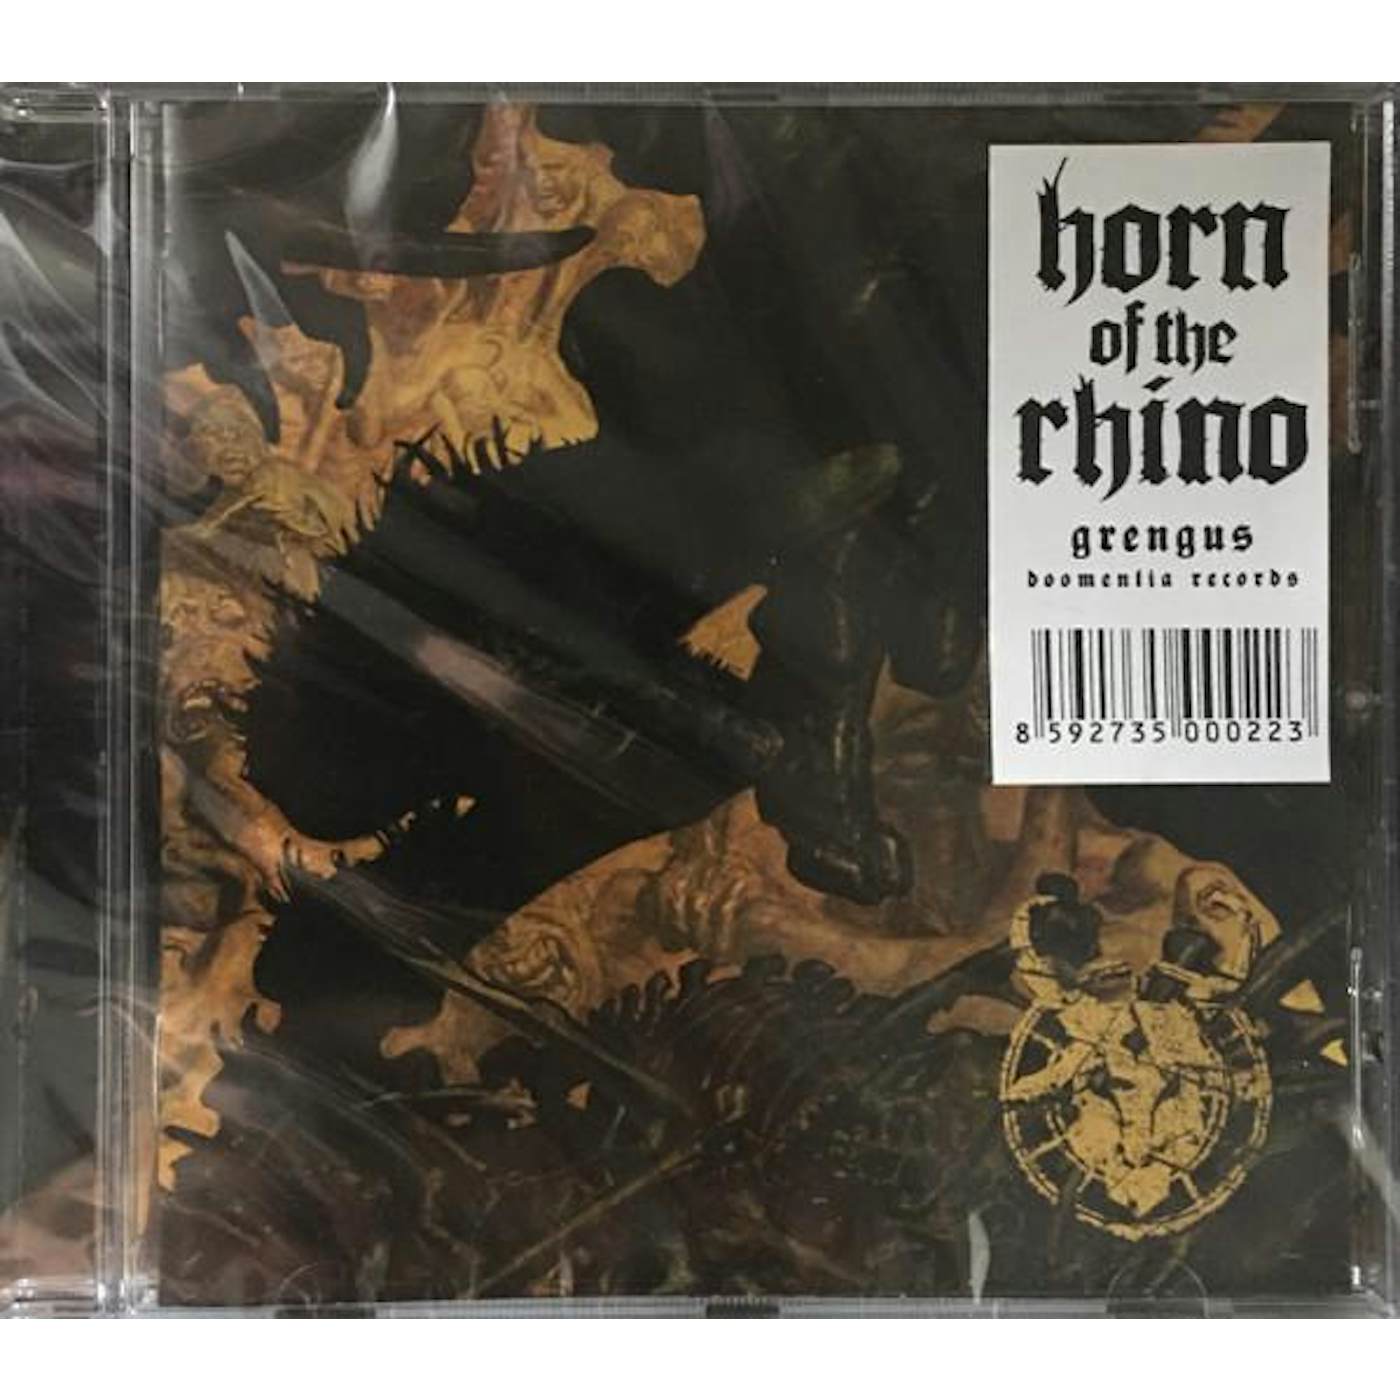 Horn of the Rhino GRENGUS CD